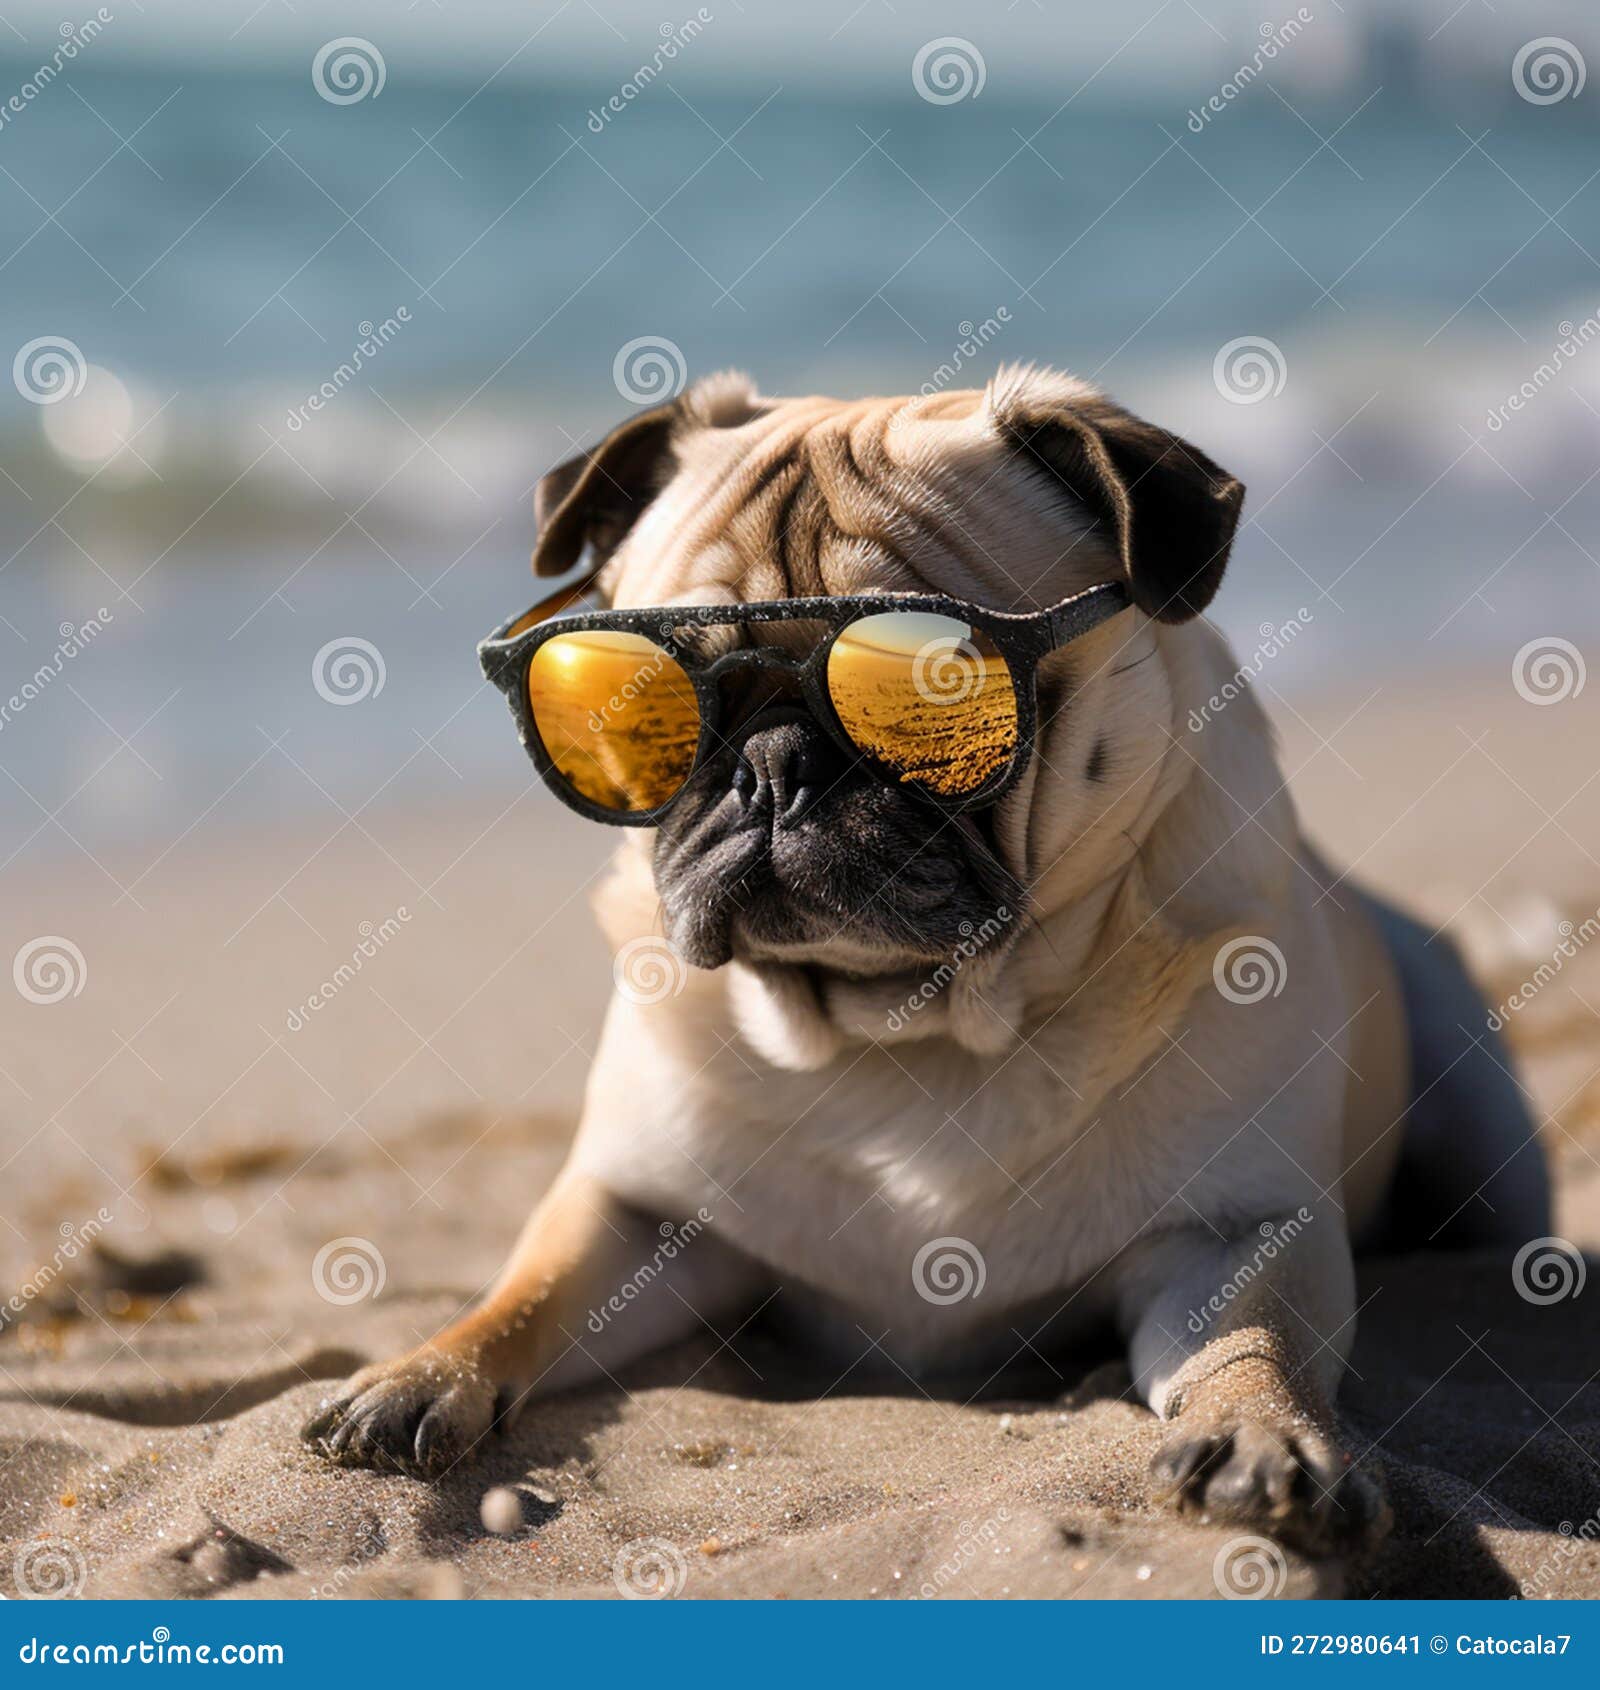 Pug Breed Dog in Big Sunglasses on the Beach Near the Sea, for